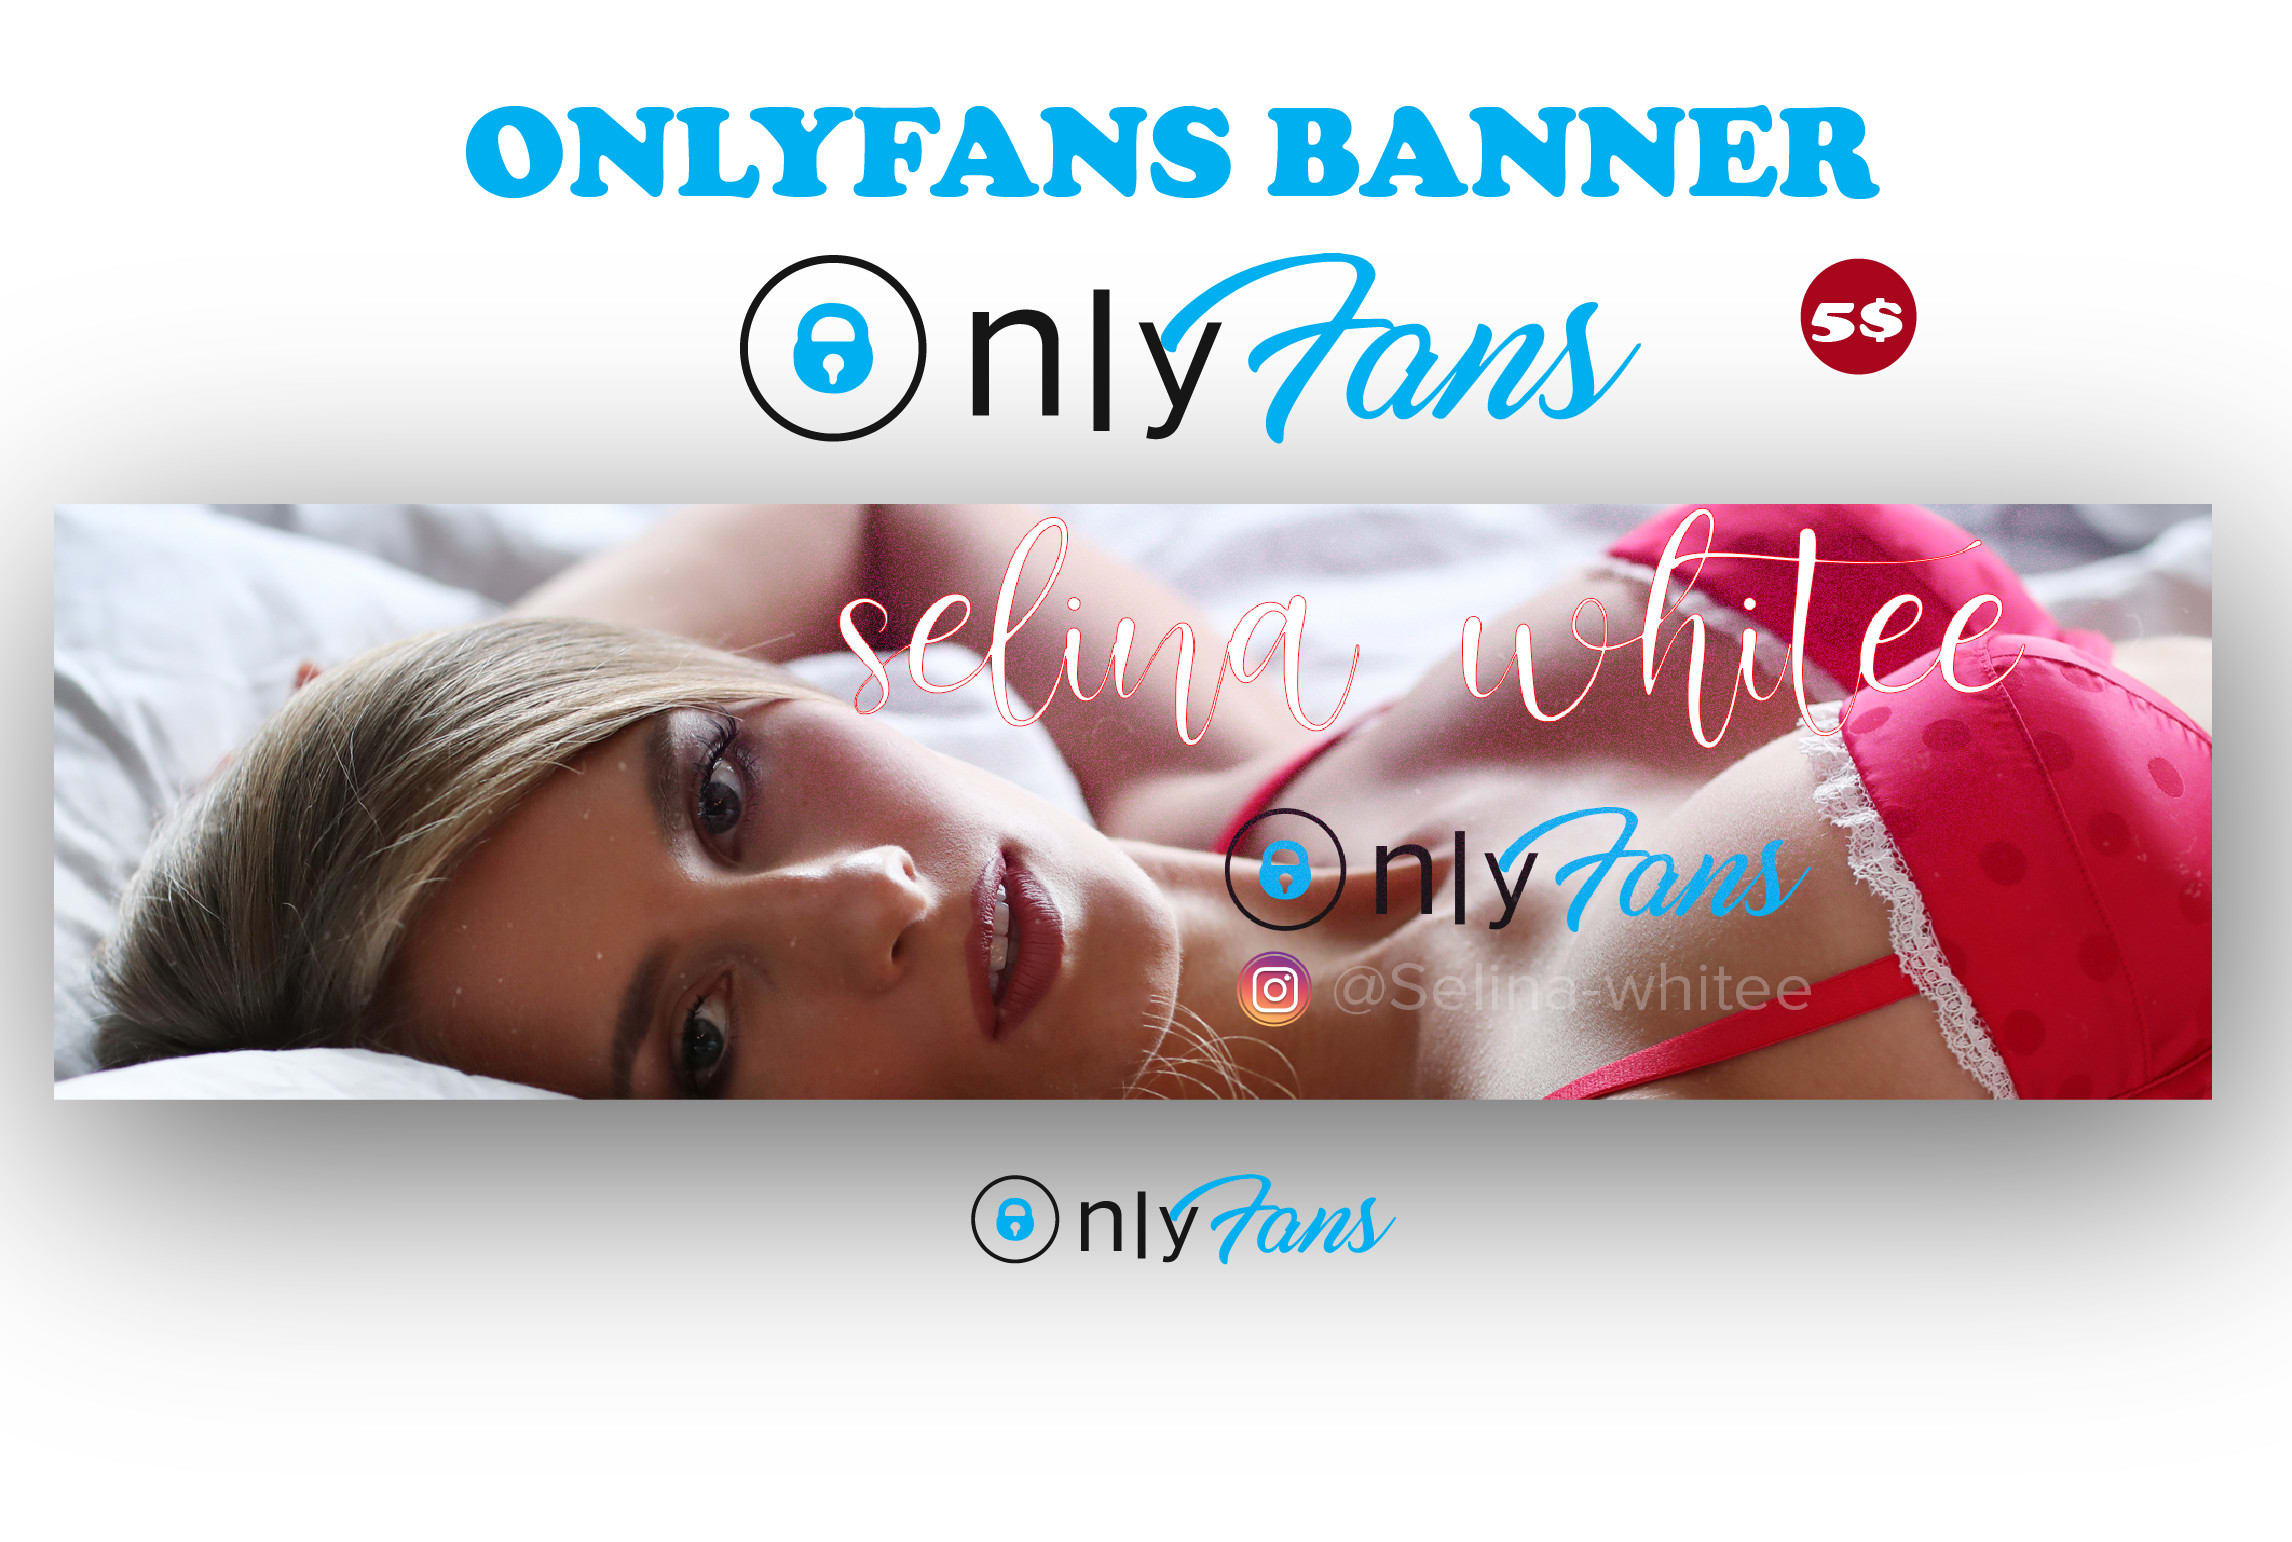 Onlyfans banner dimensions